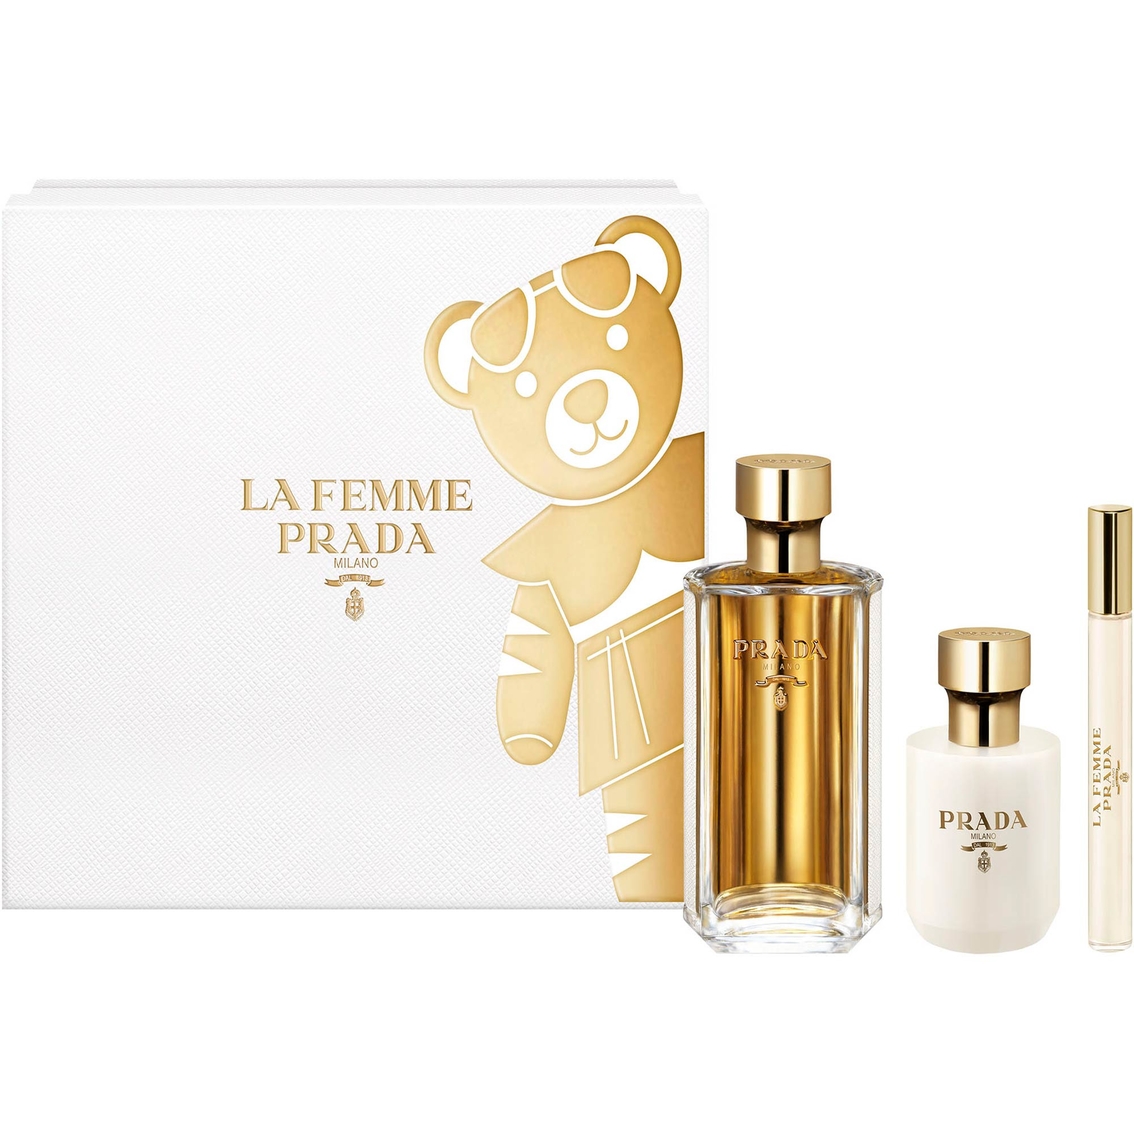 Prada La Femme Prada Gift Set | Gifts 